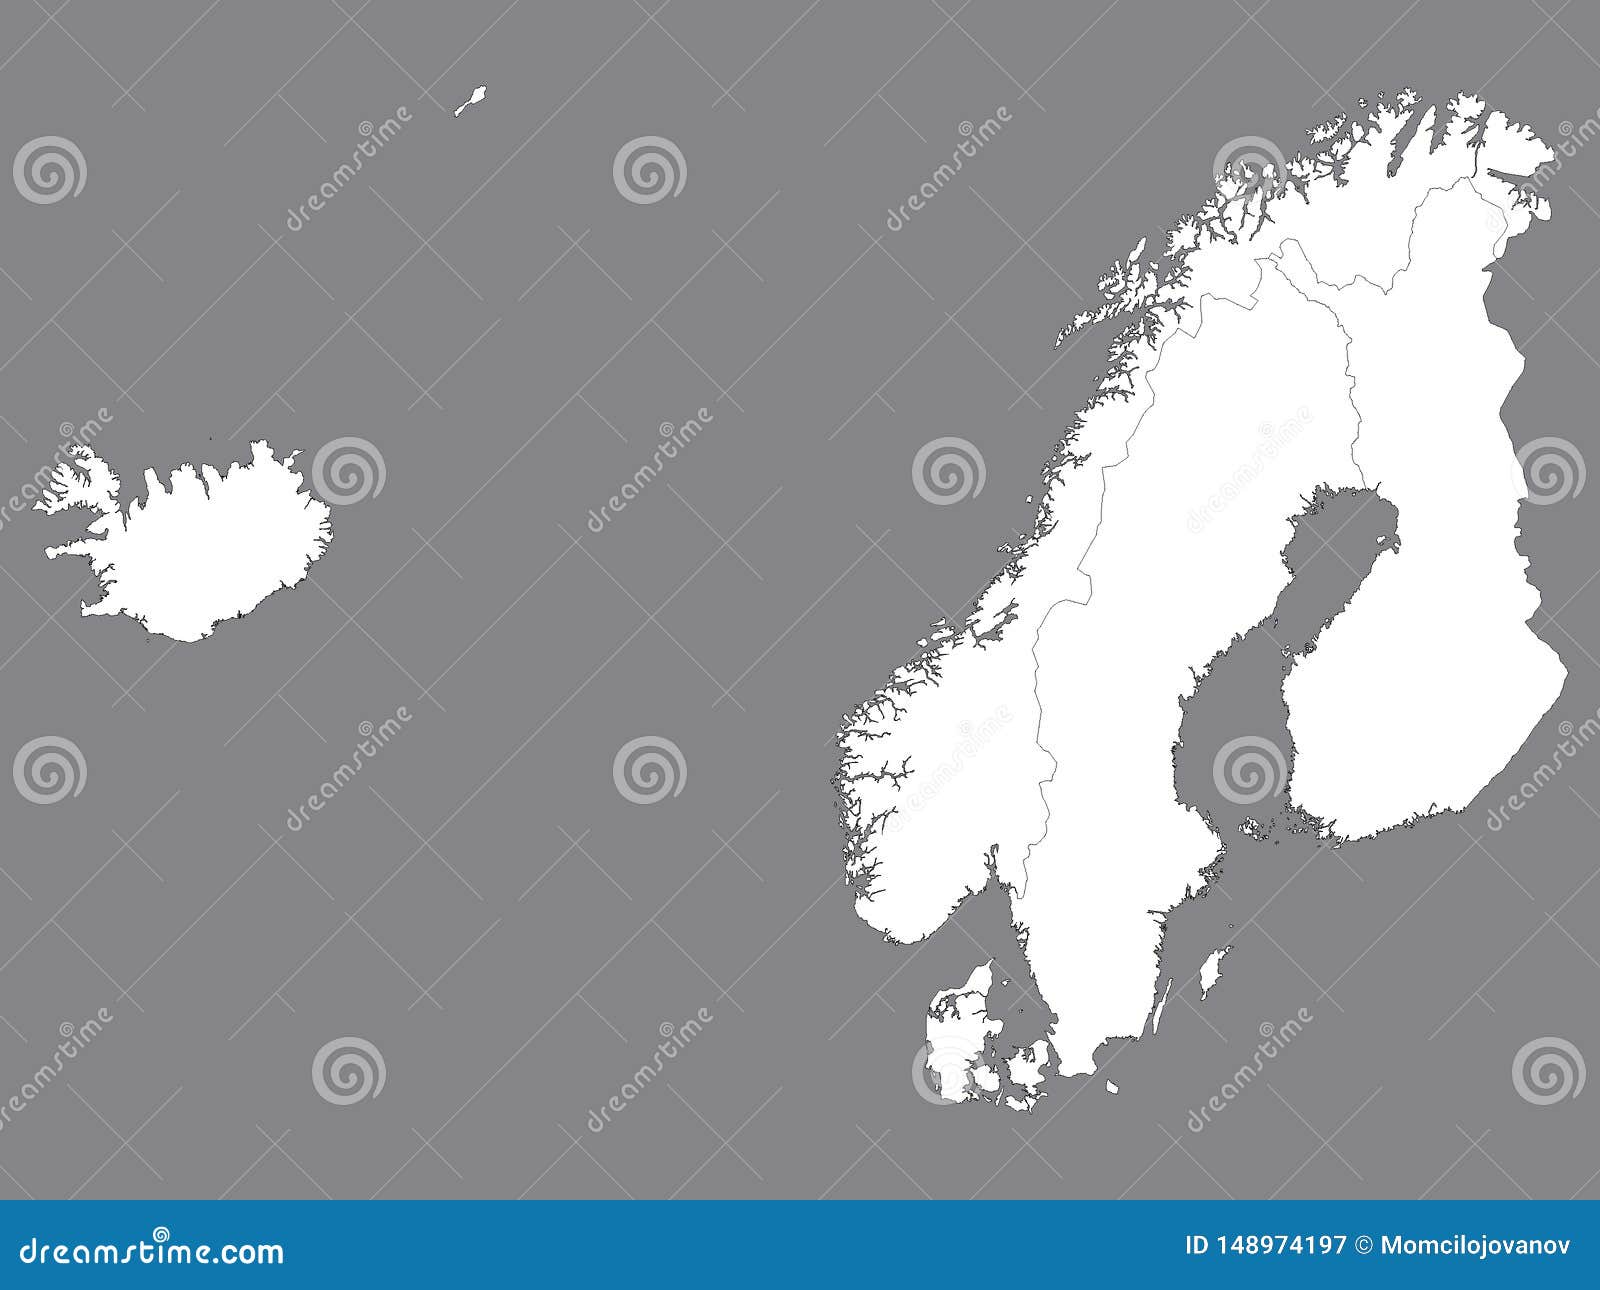 white map of scandinavia on gray background